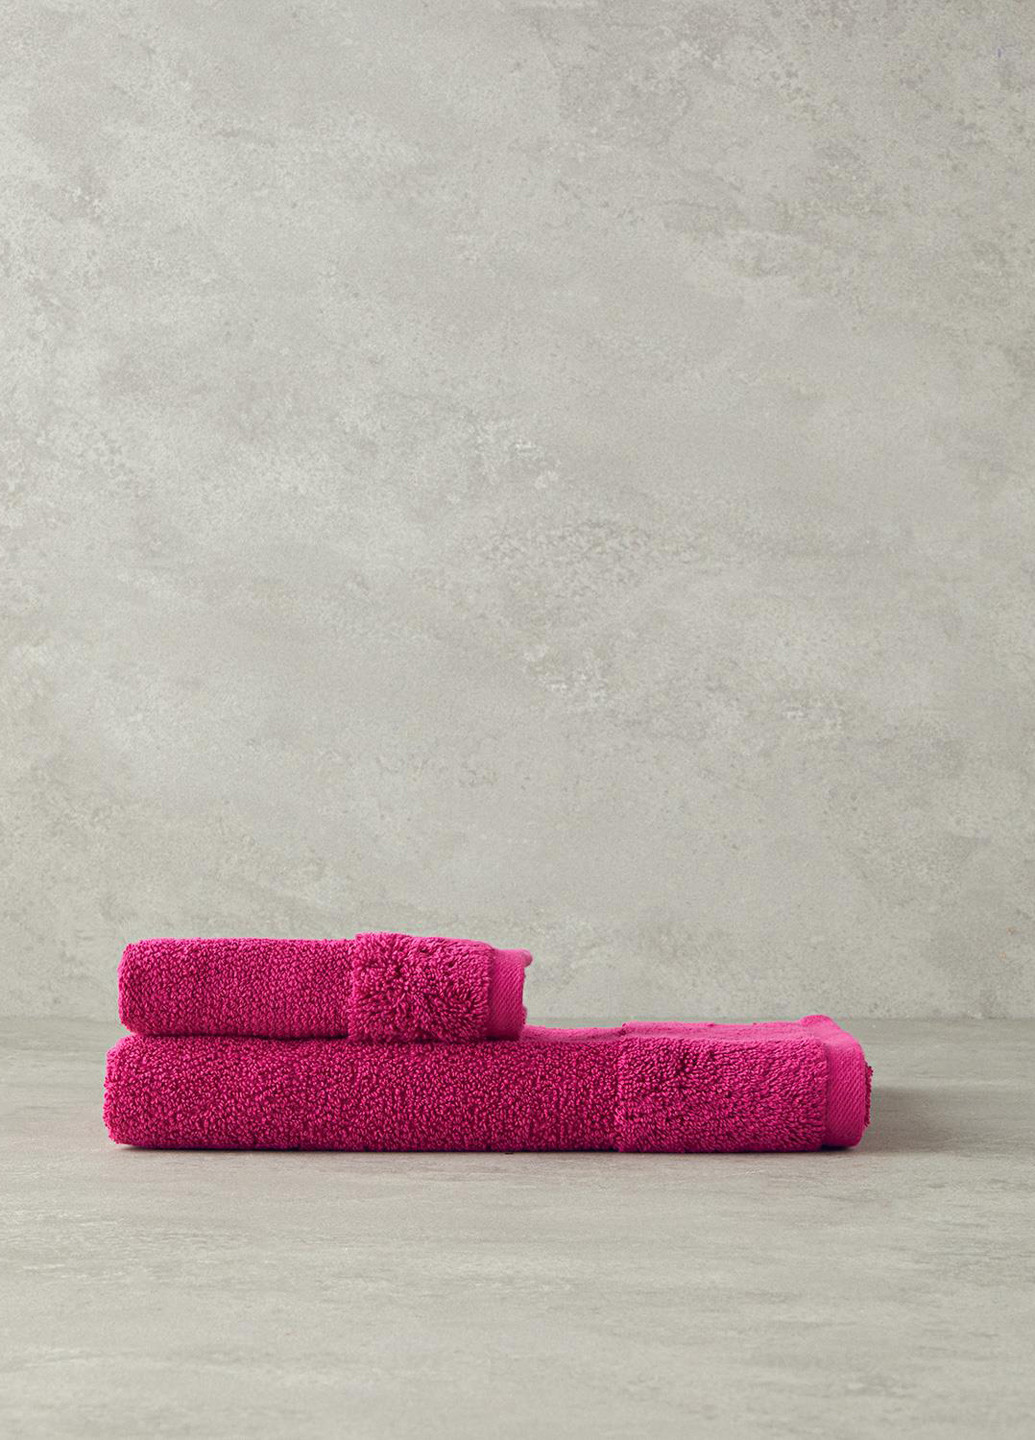 English Home полотенце для рук, 30х45 см однотонный малиновый производство - Турция